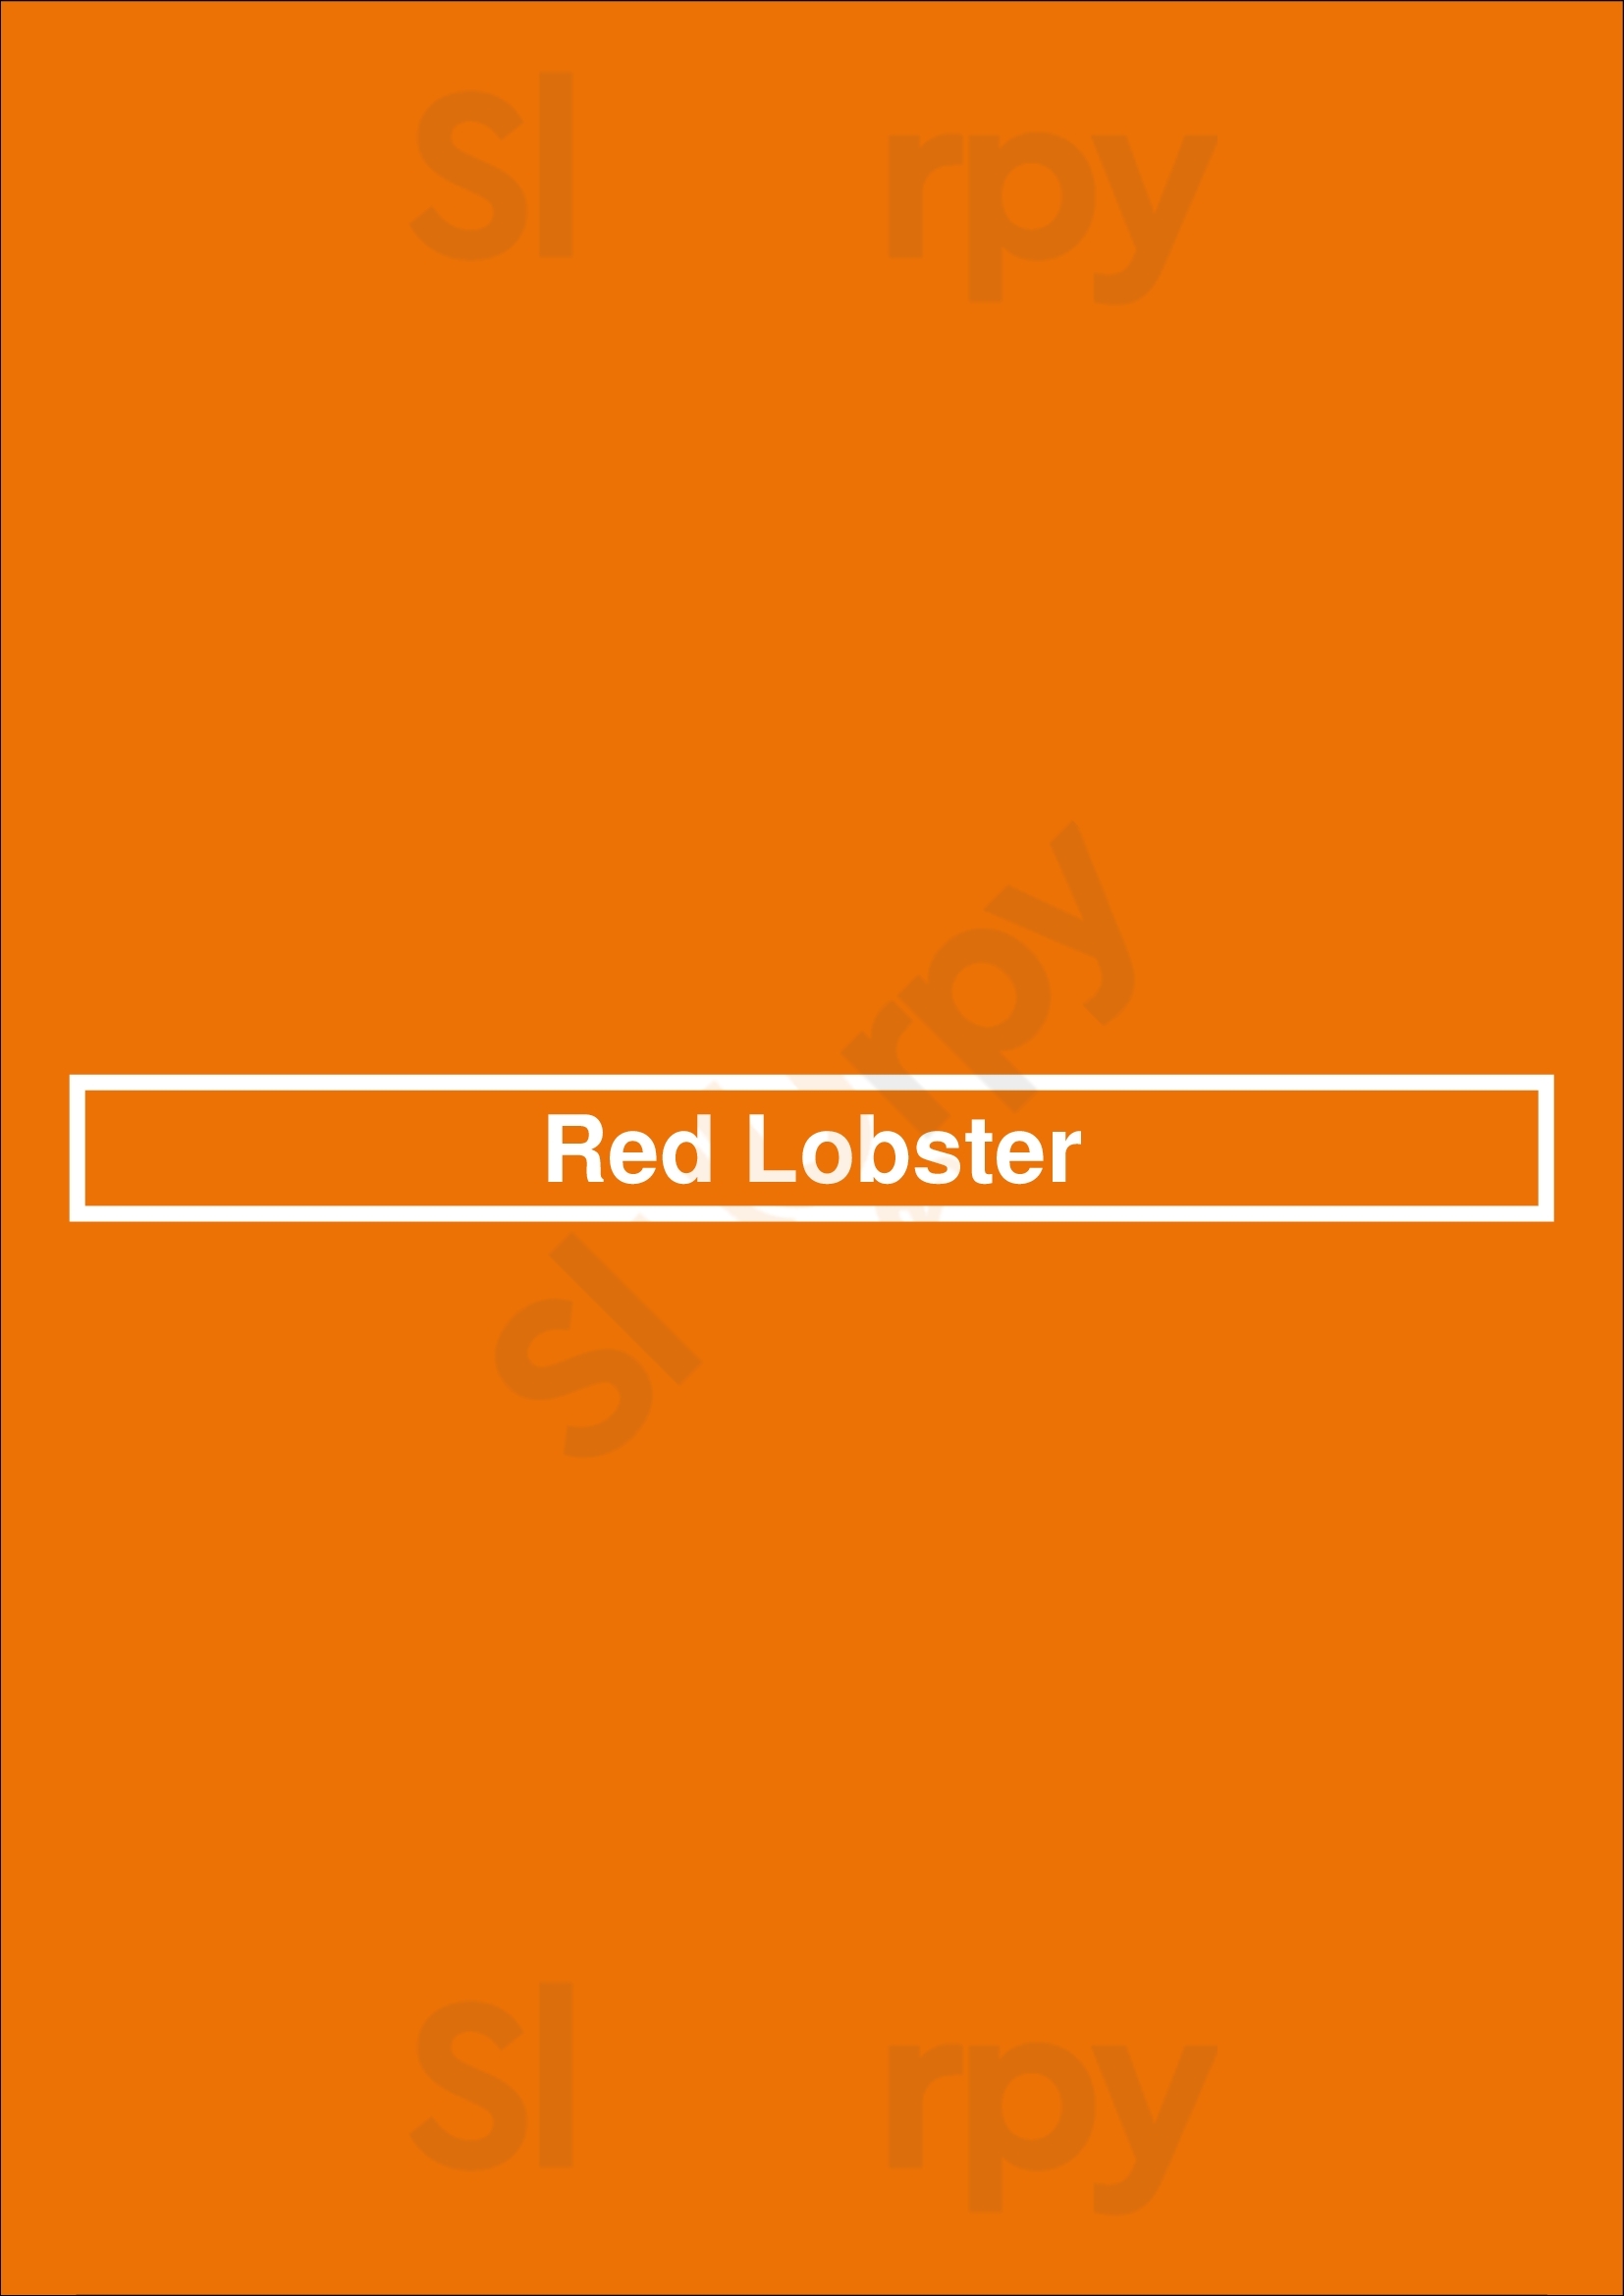 Red Lobster Toronto Menu - 1